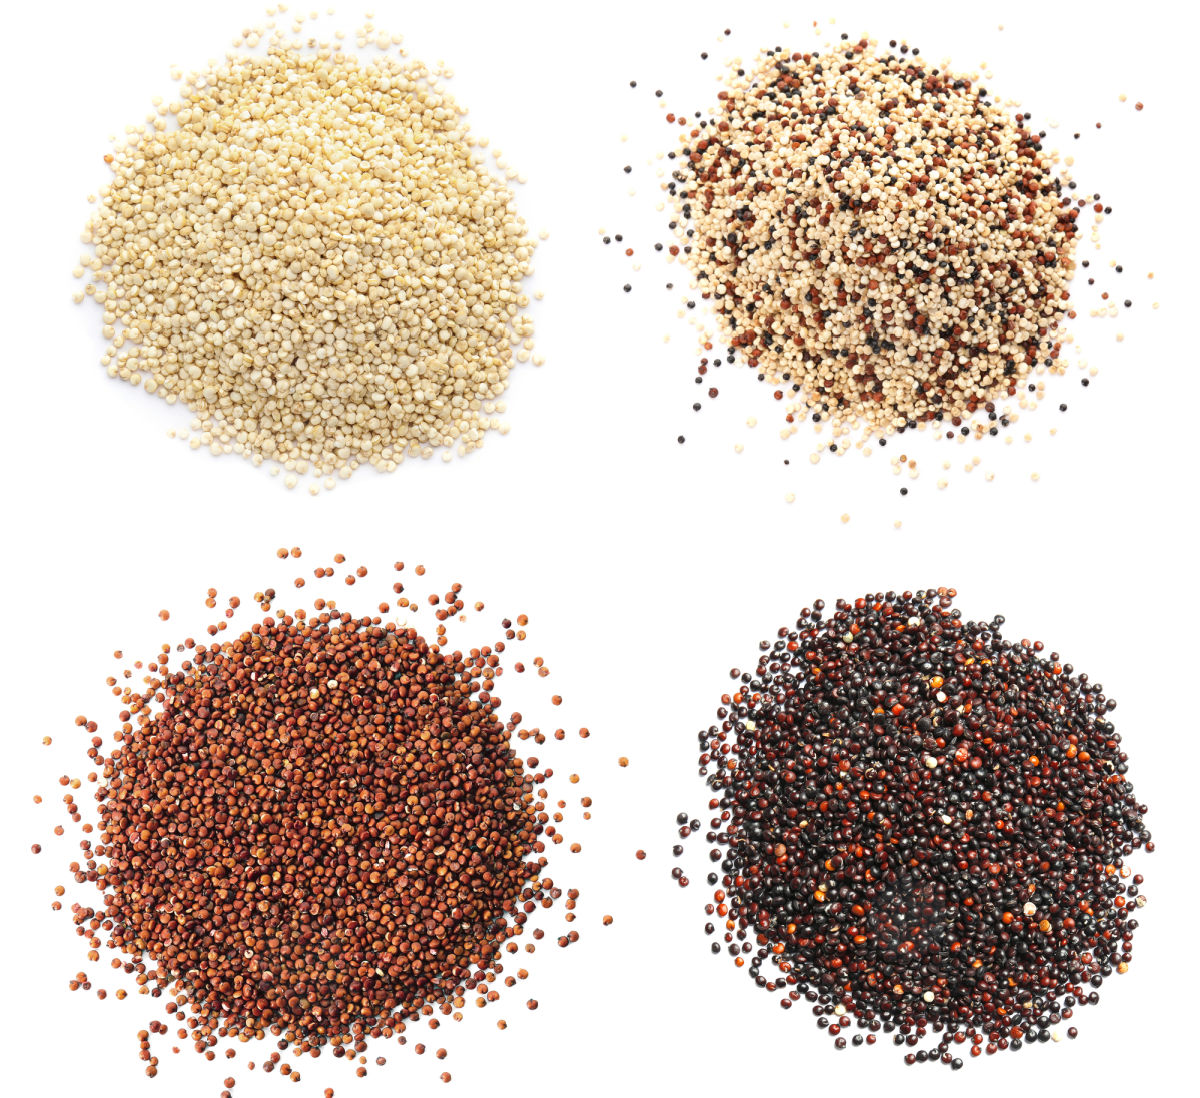 4 colors of quinoa grain